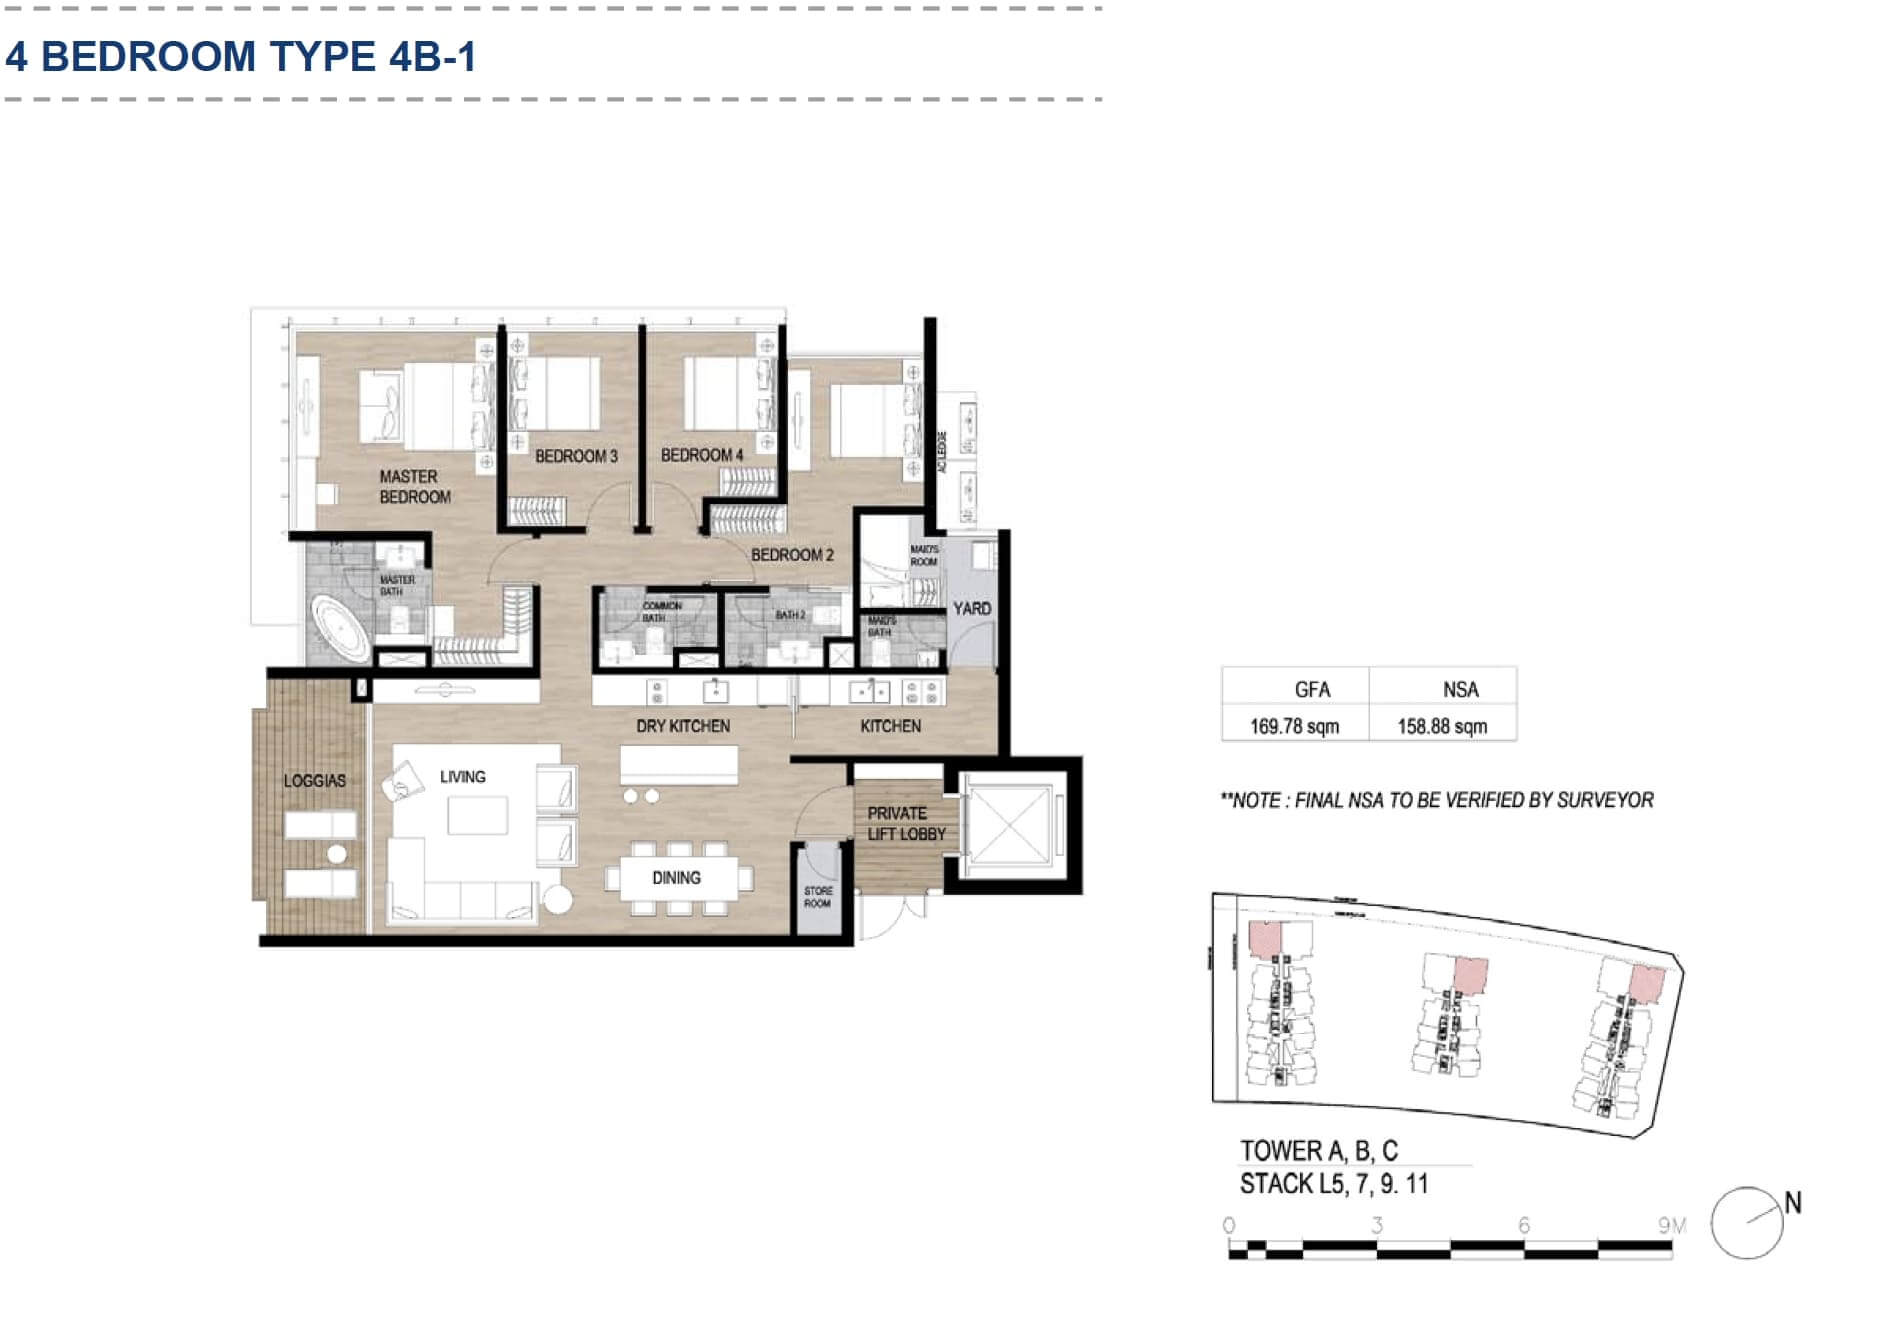 Floor plan of 4-bedroom apartment Metropole Thu Thiem 1